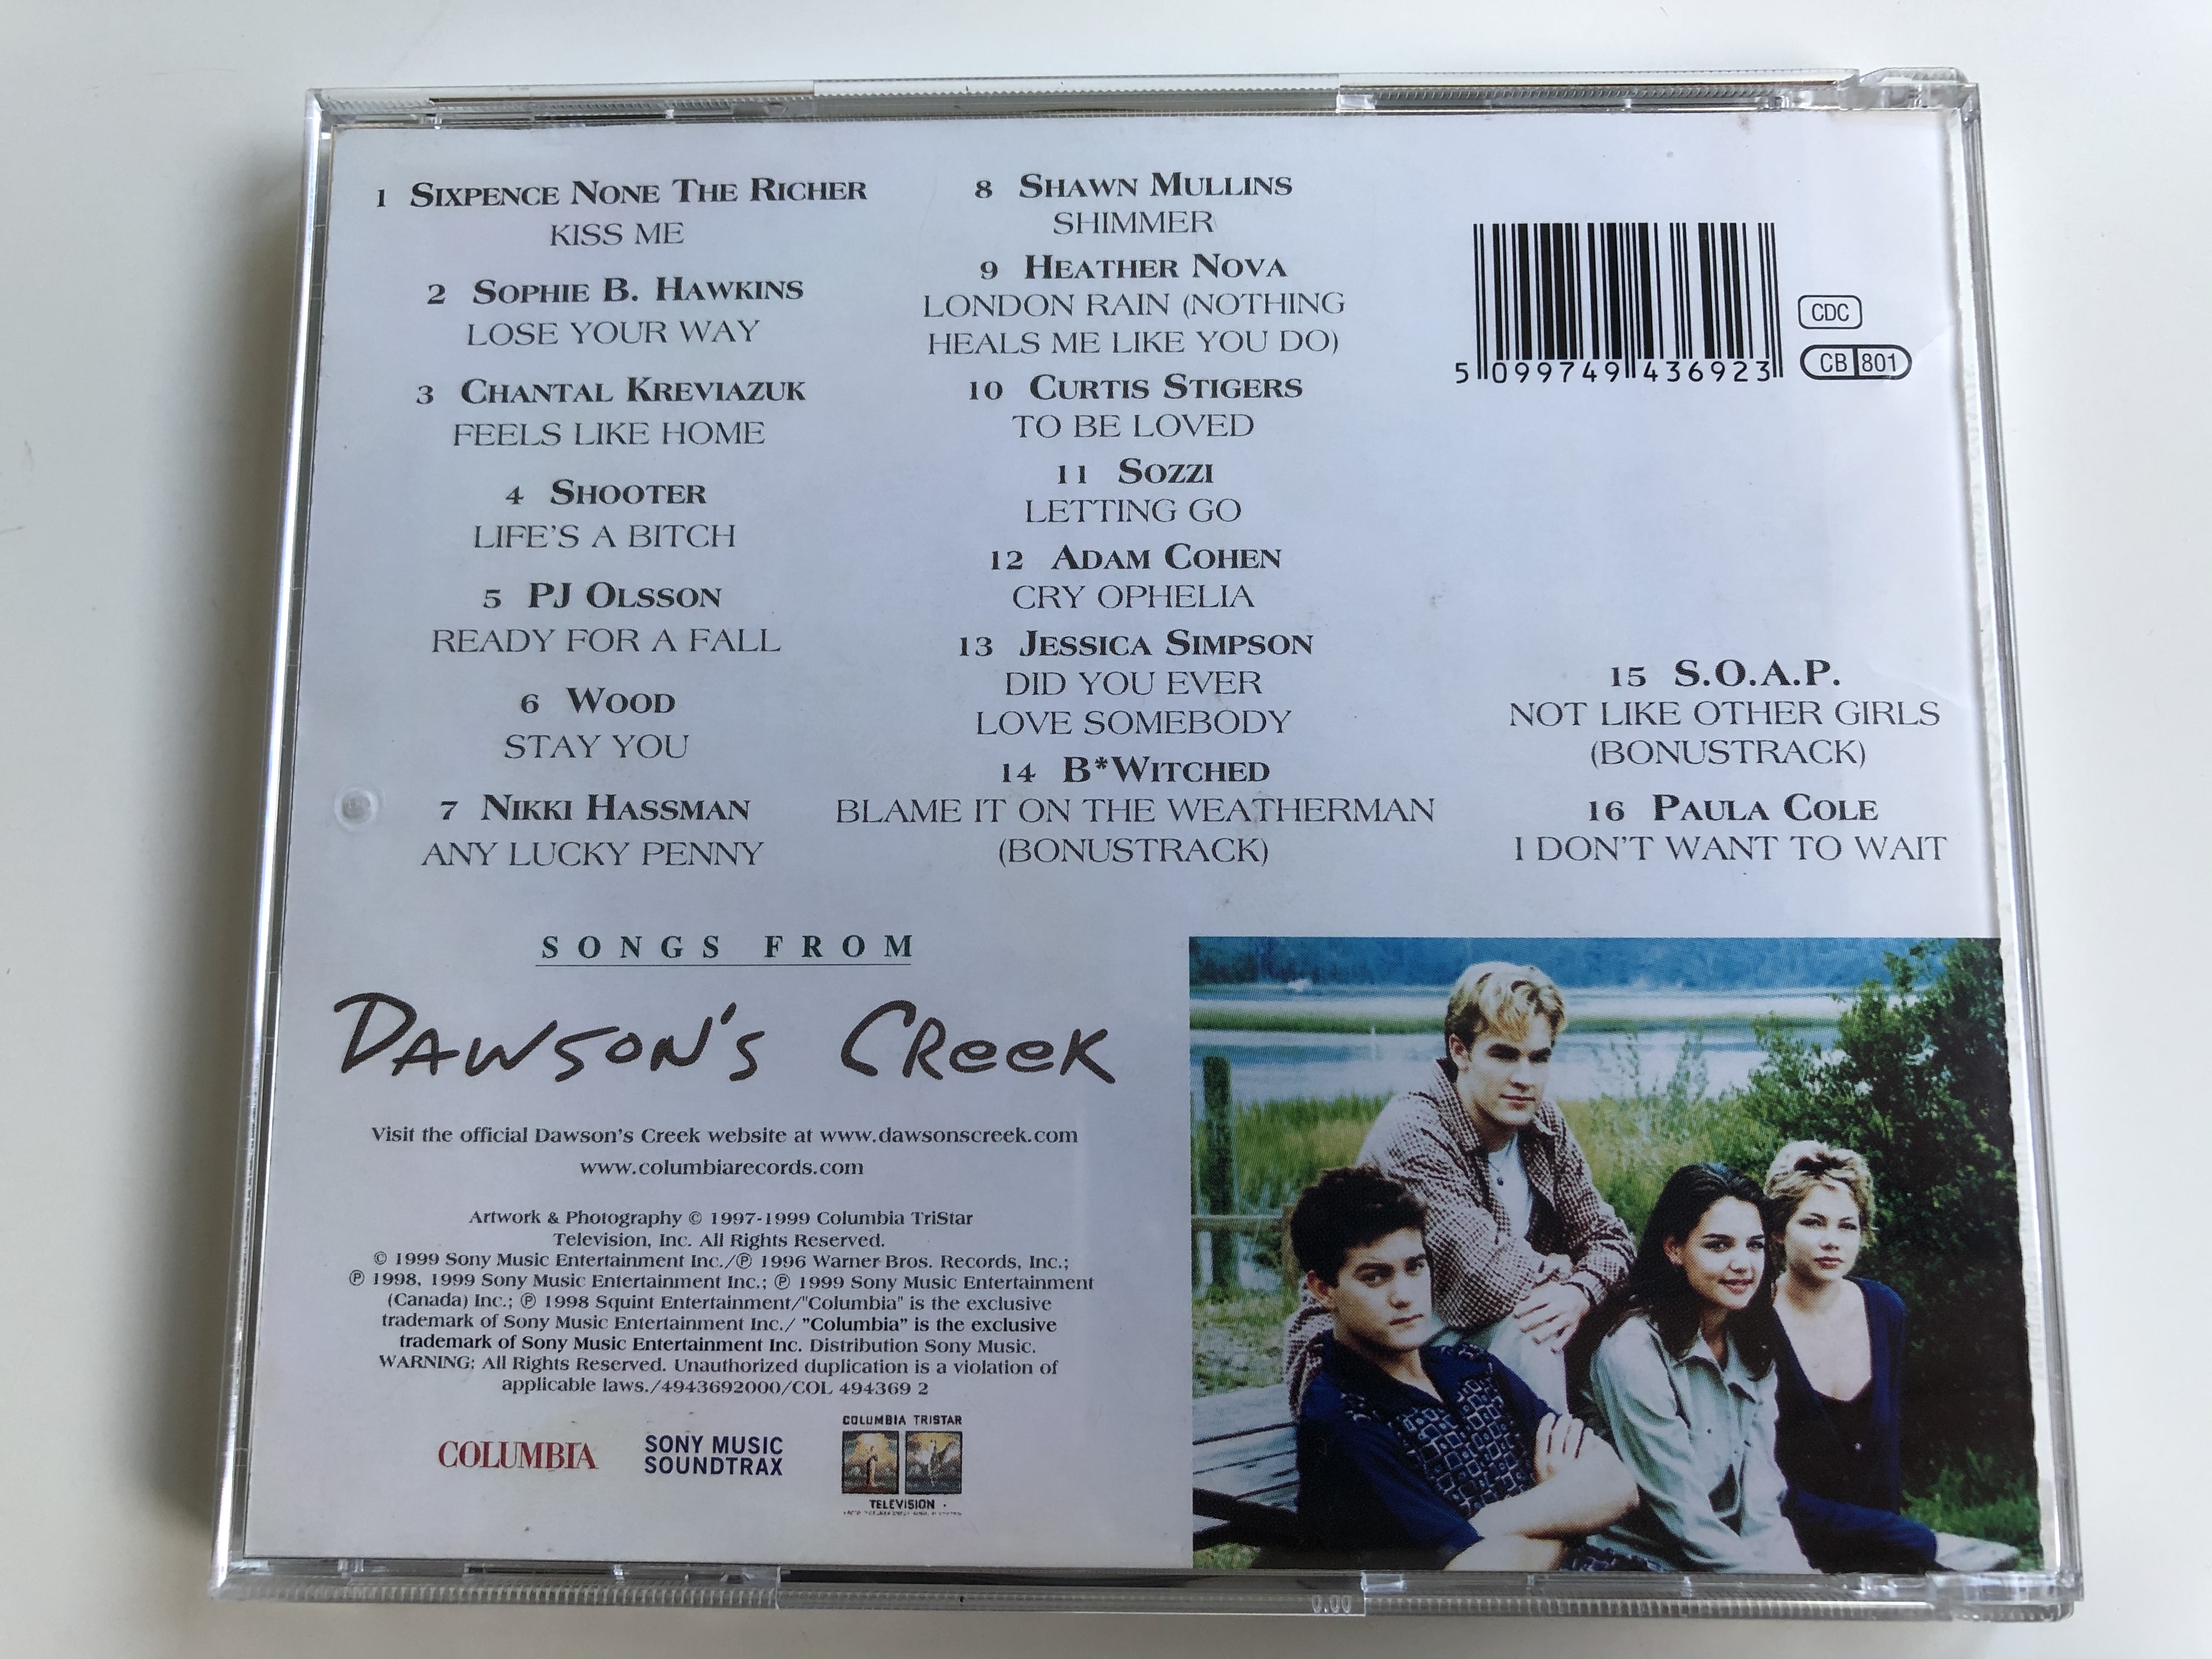 songs-from-dawson-s-creek-columbia-audio-cd-1999-col-494369-2-3-.jpg